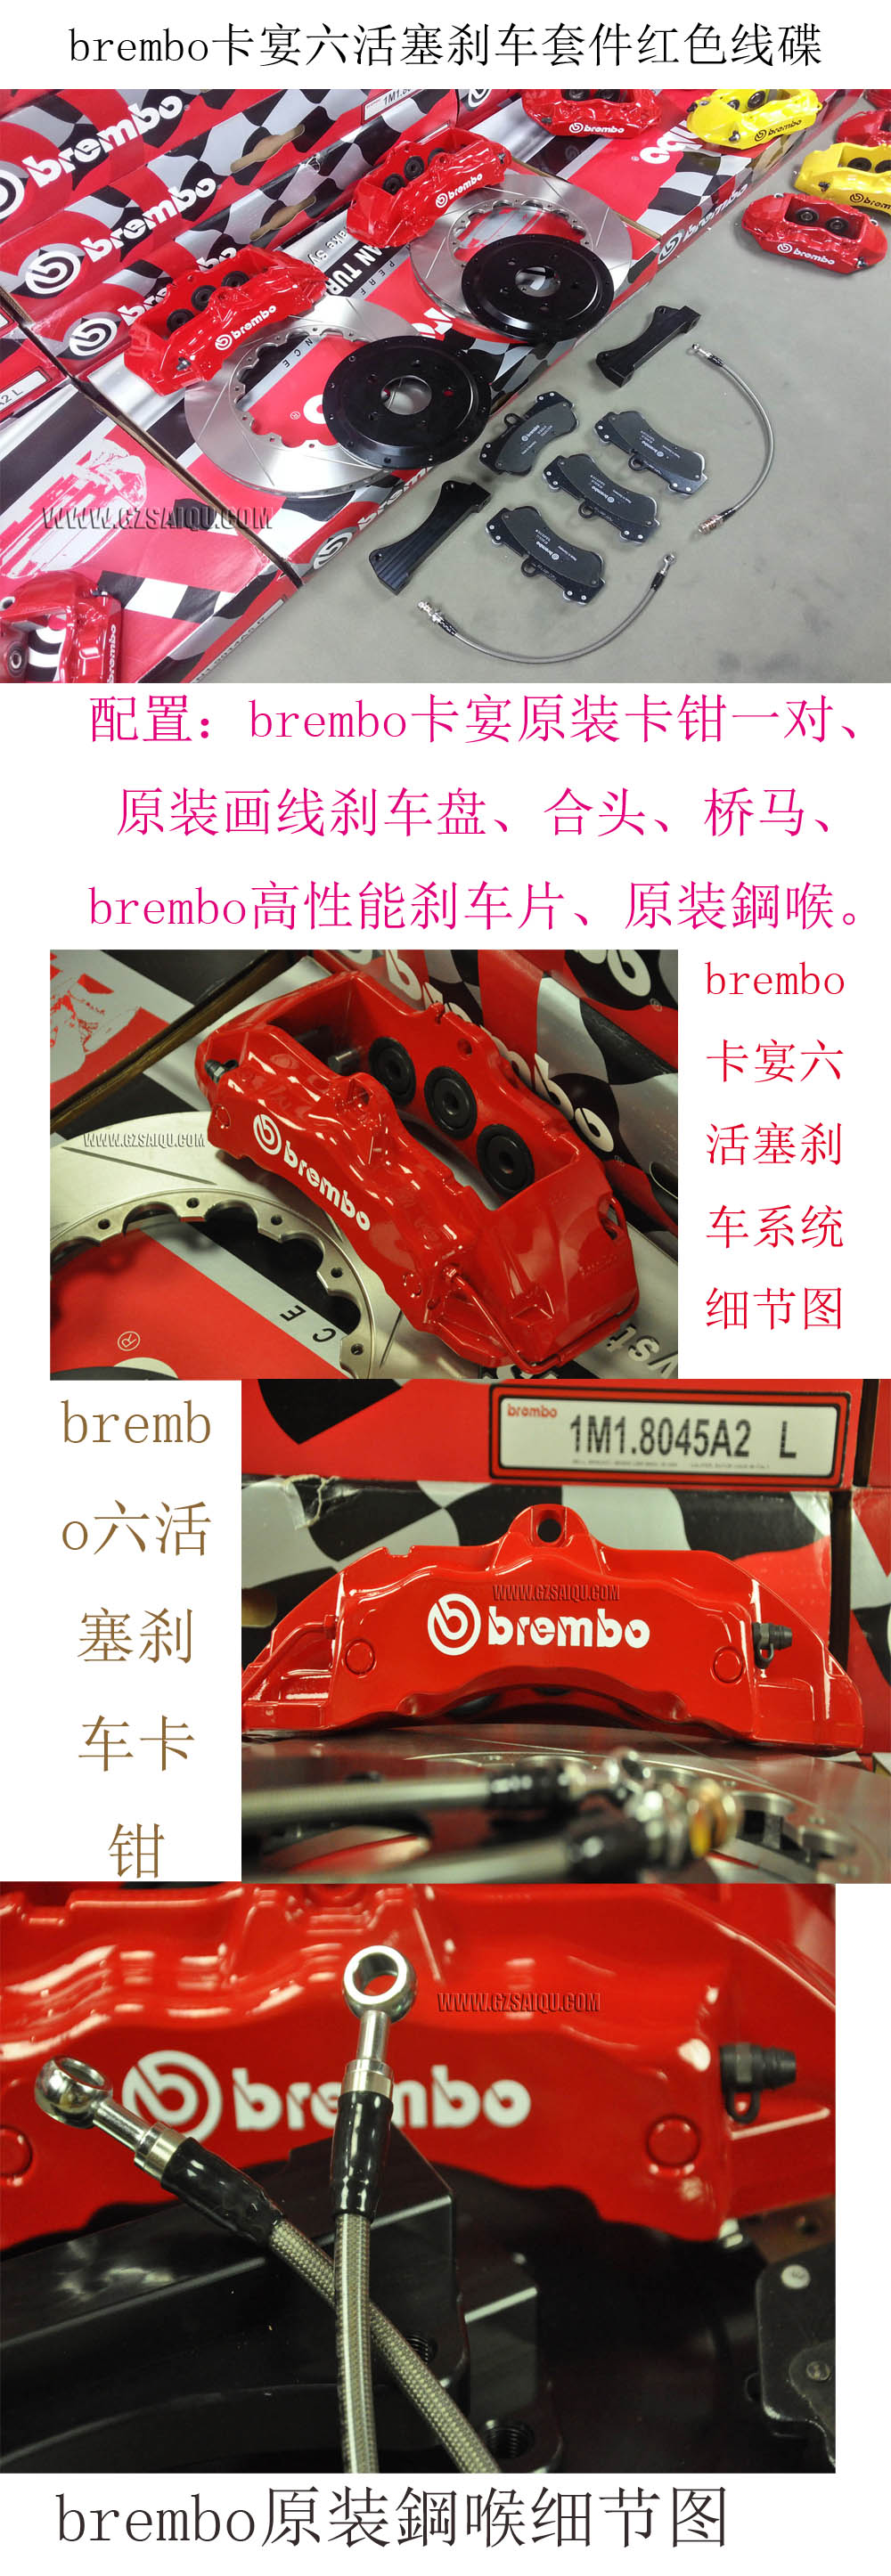 brembo GT6活塞高性能刹车系统套件